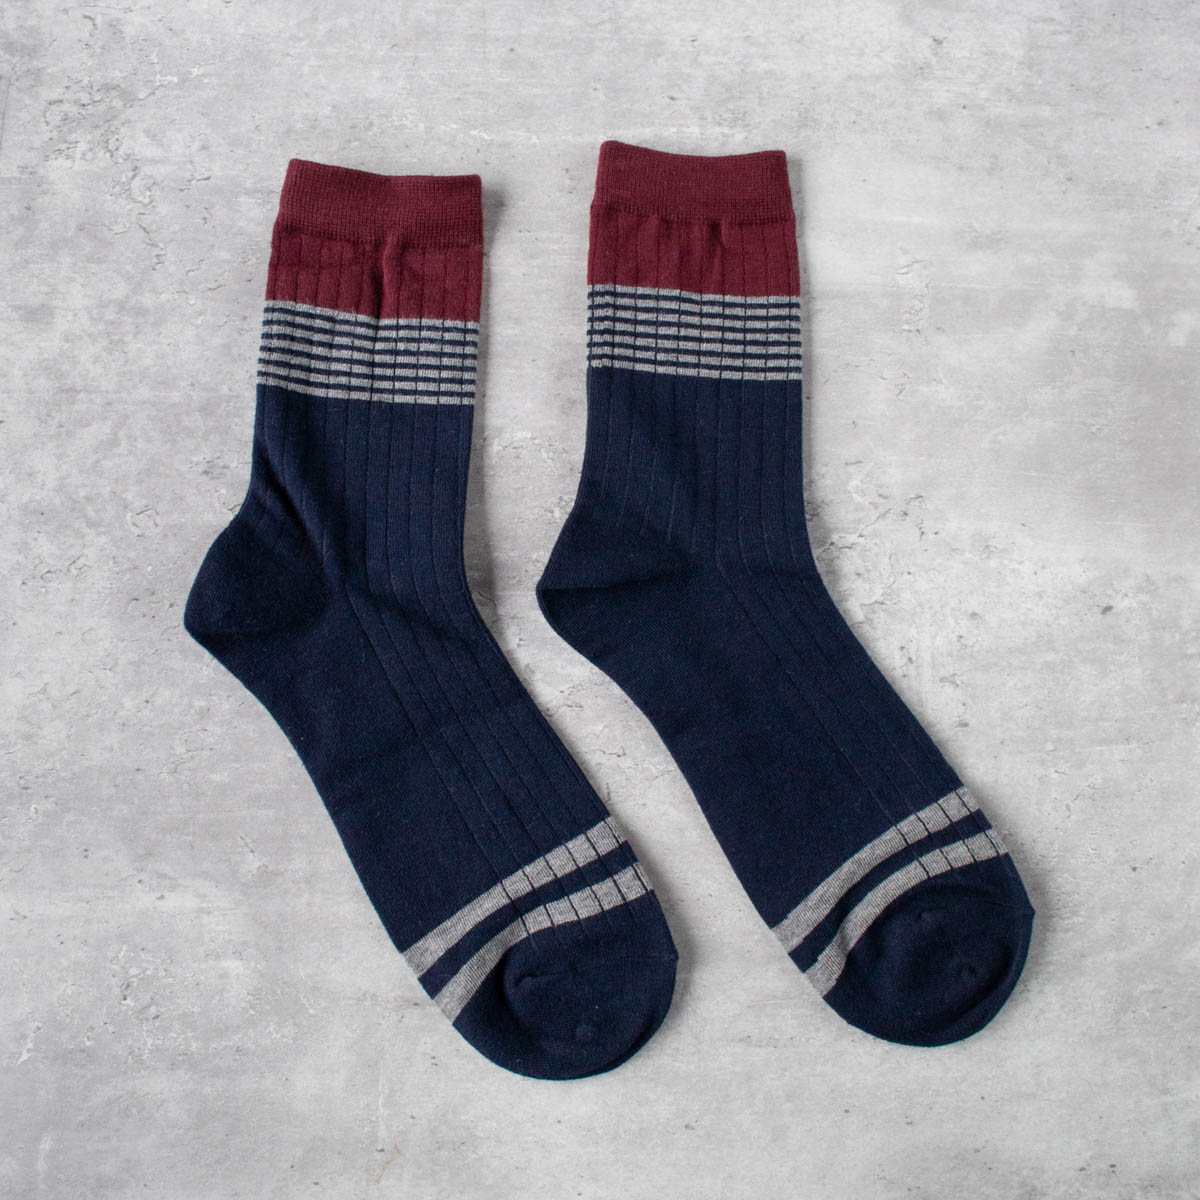 Duo Stripe Socks - WINE/NAVY